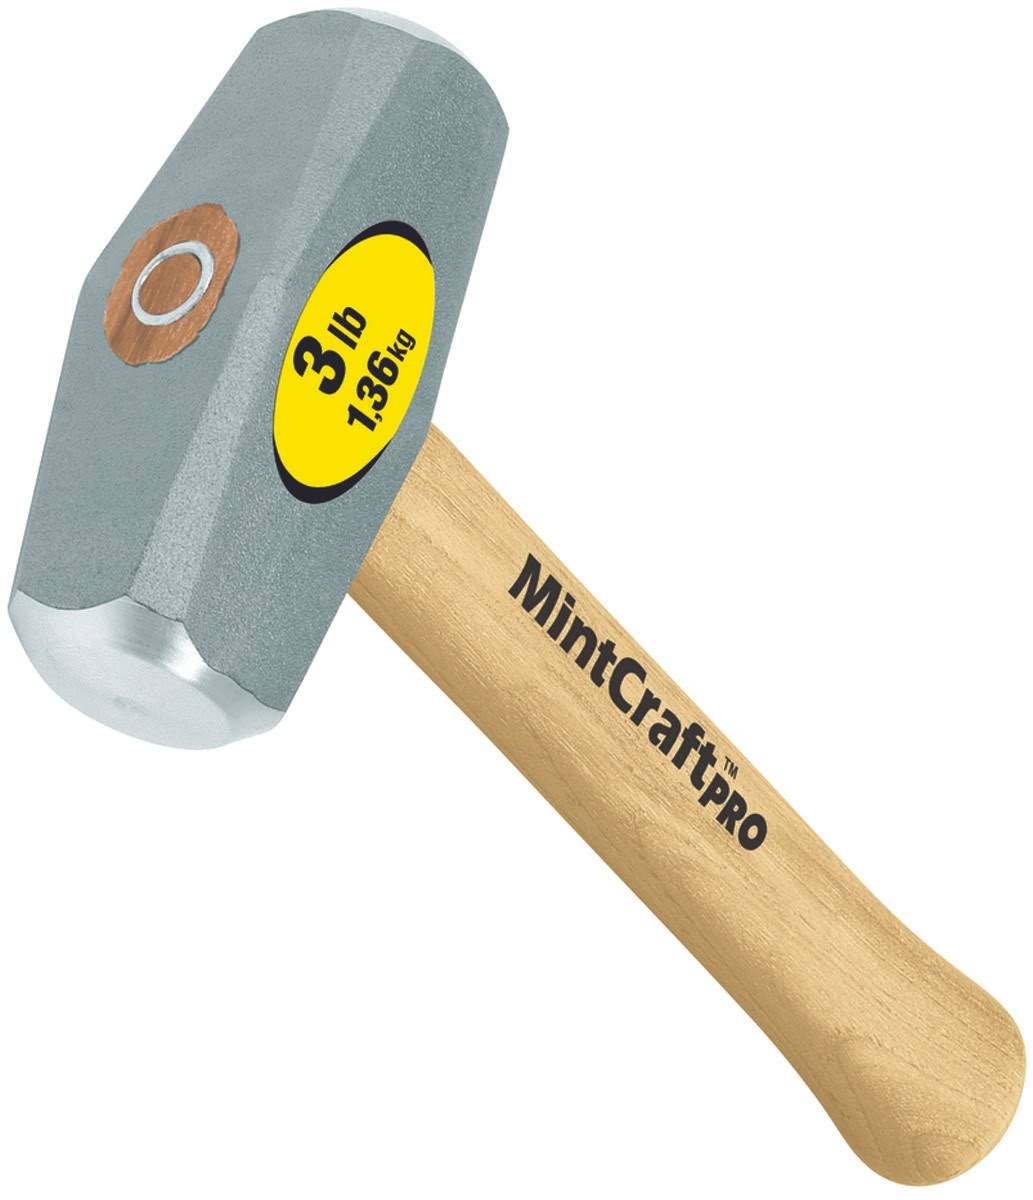 Mintcraft Pro Drilling Hammer